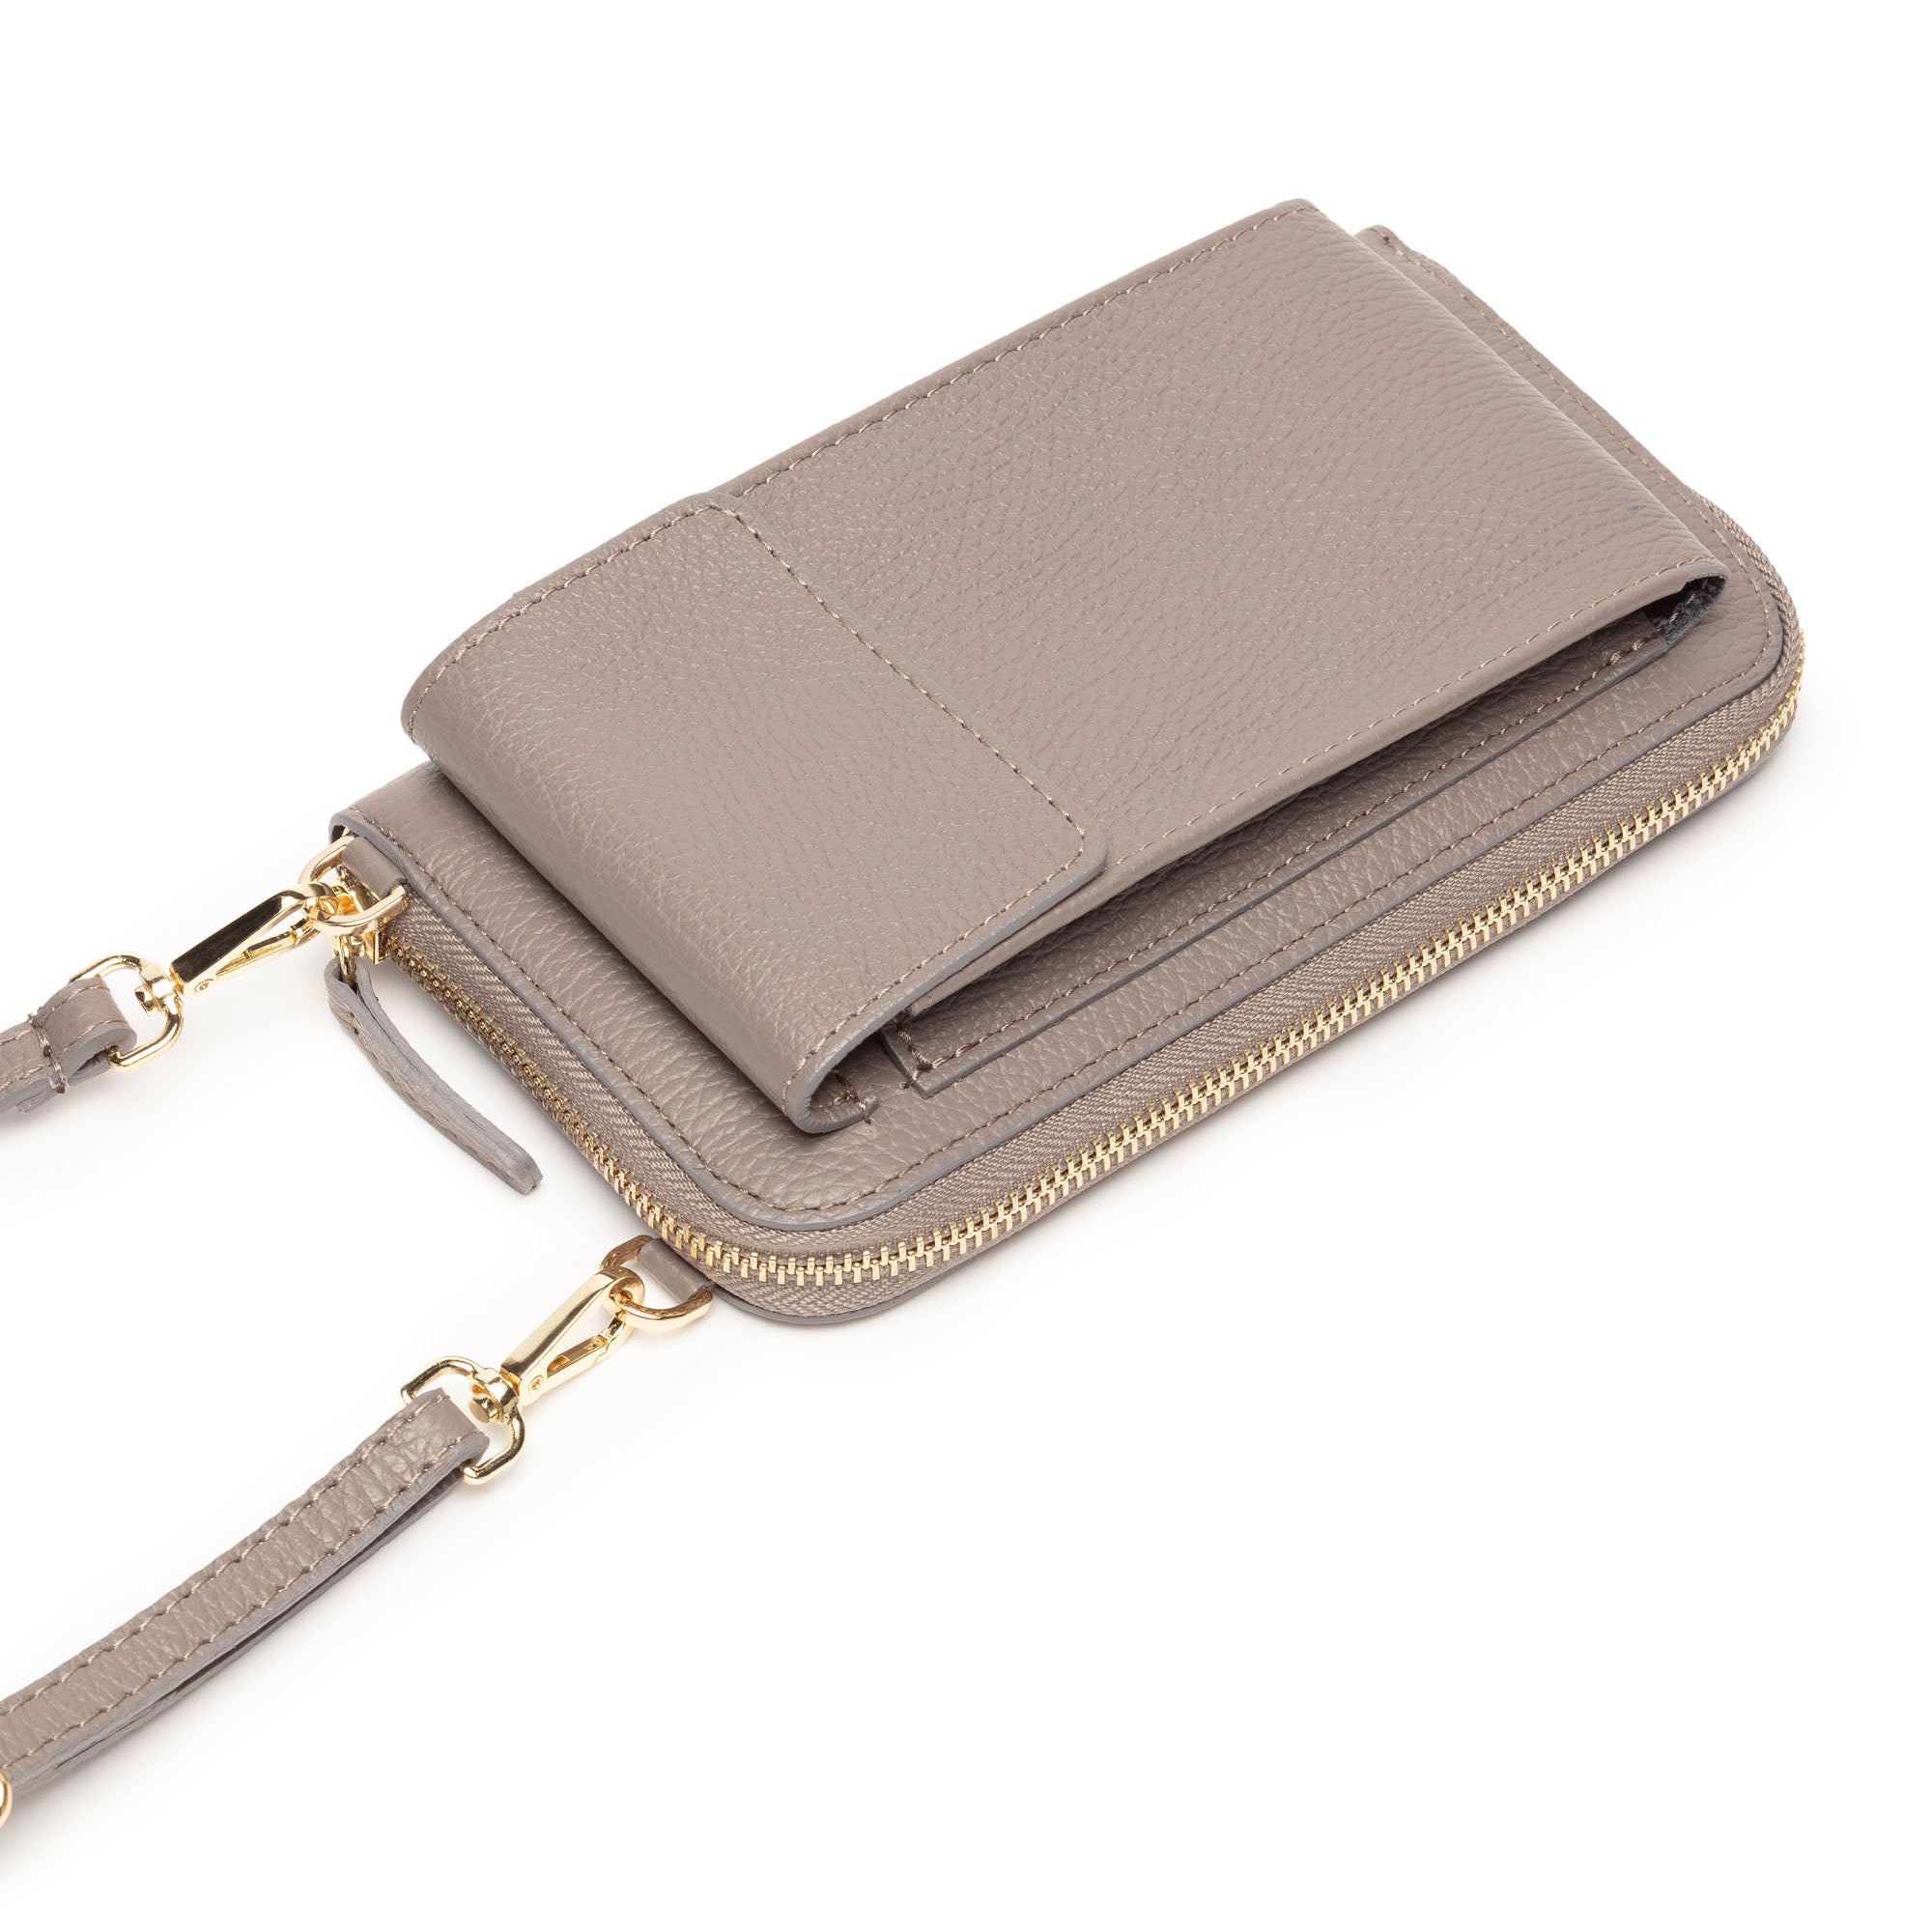 Phonebag Grey (Leopard strap)